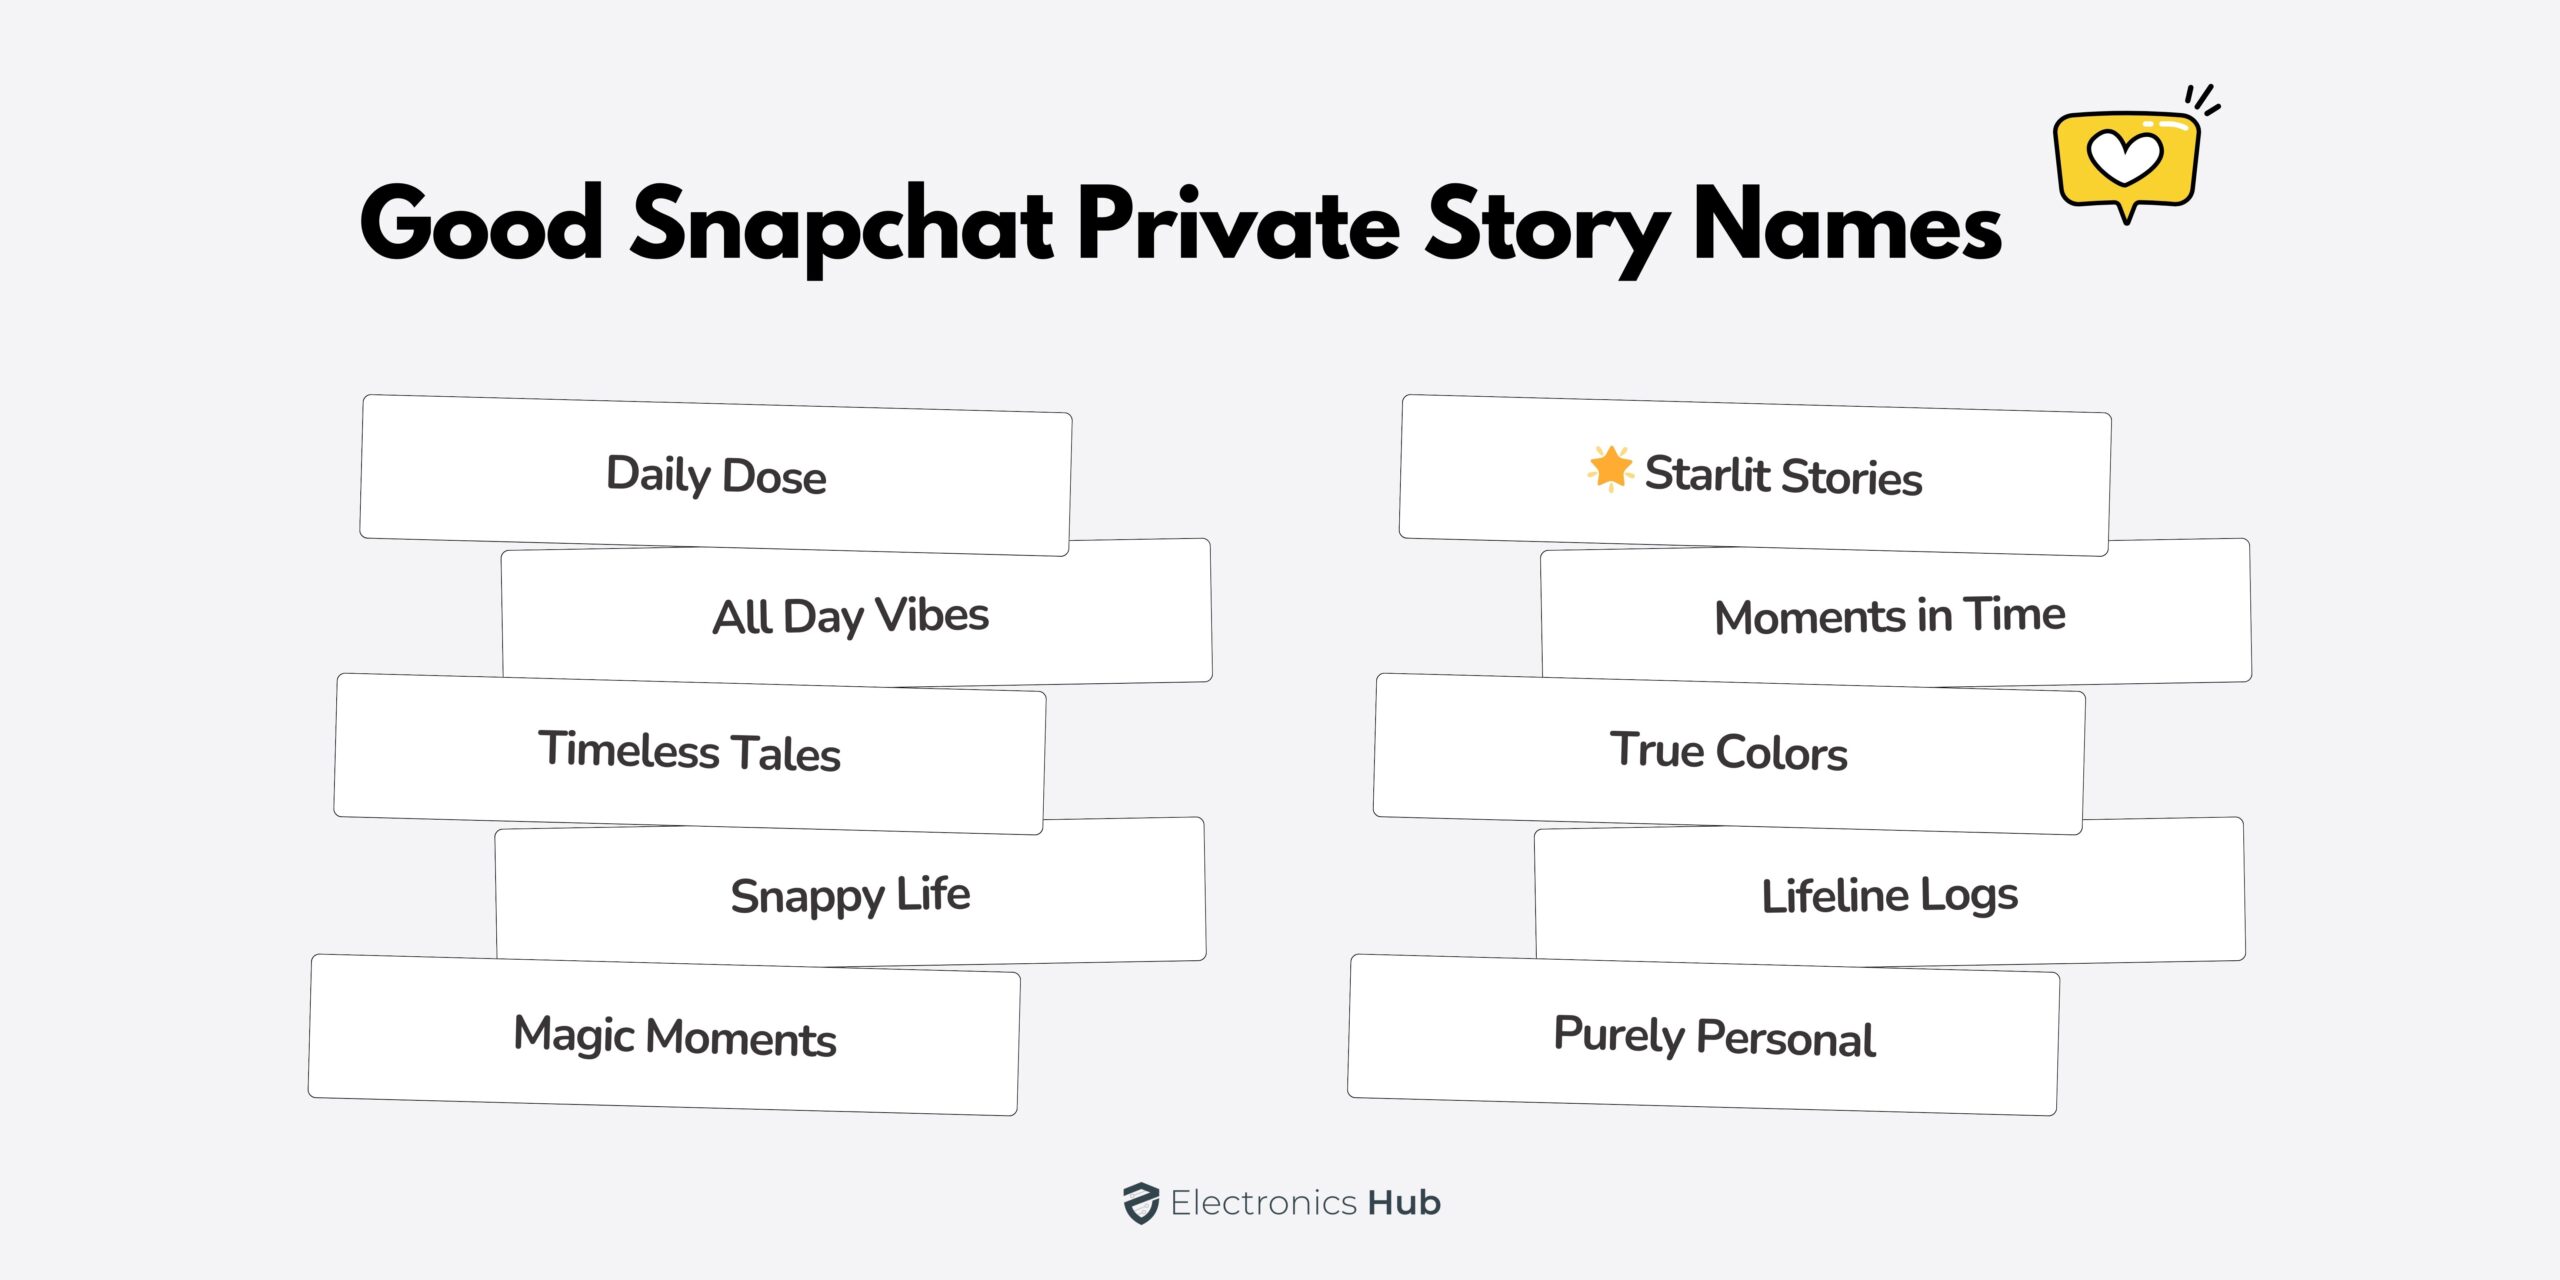 Good Snapchat Private Story Names